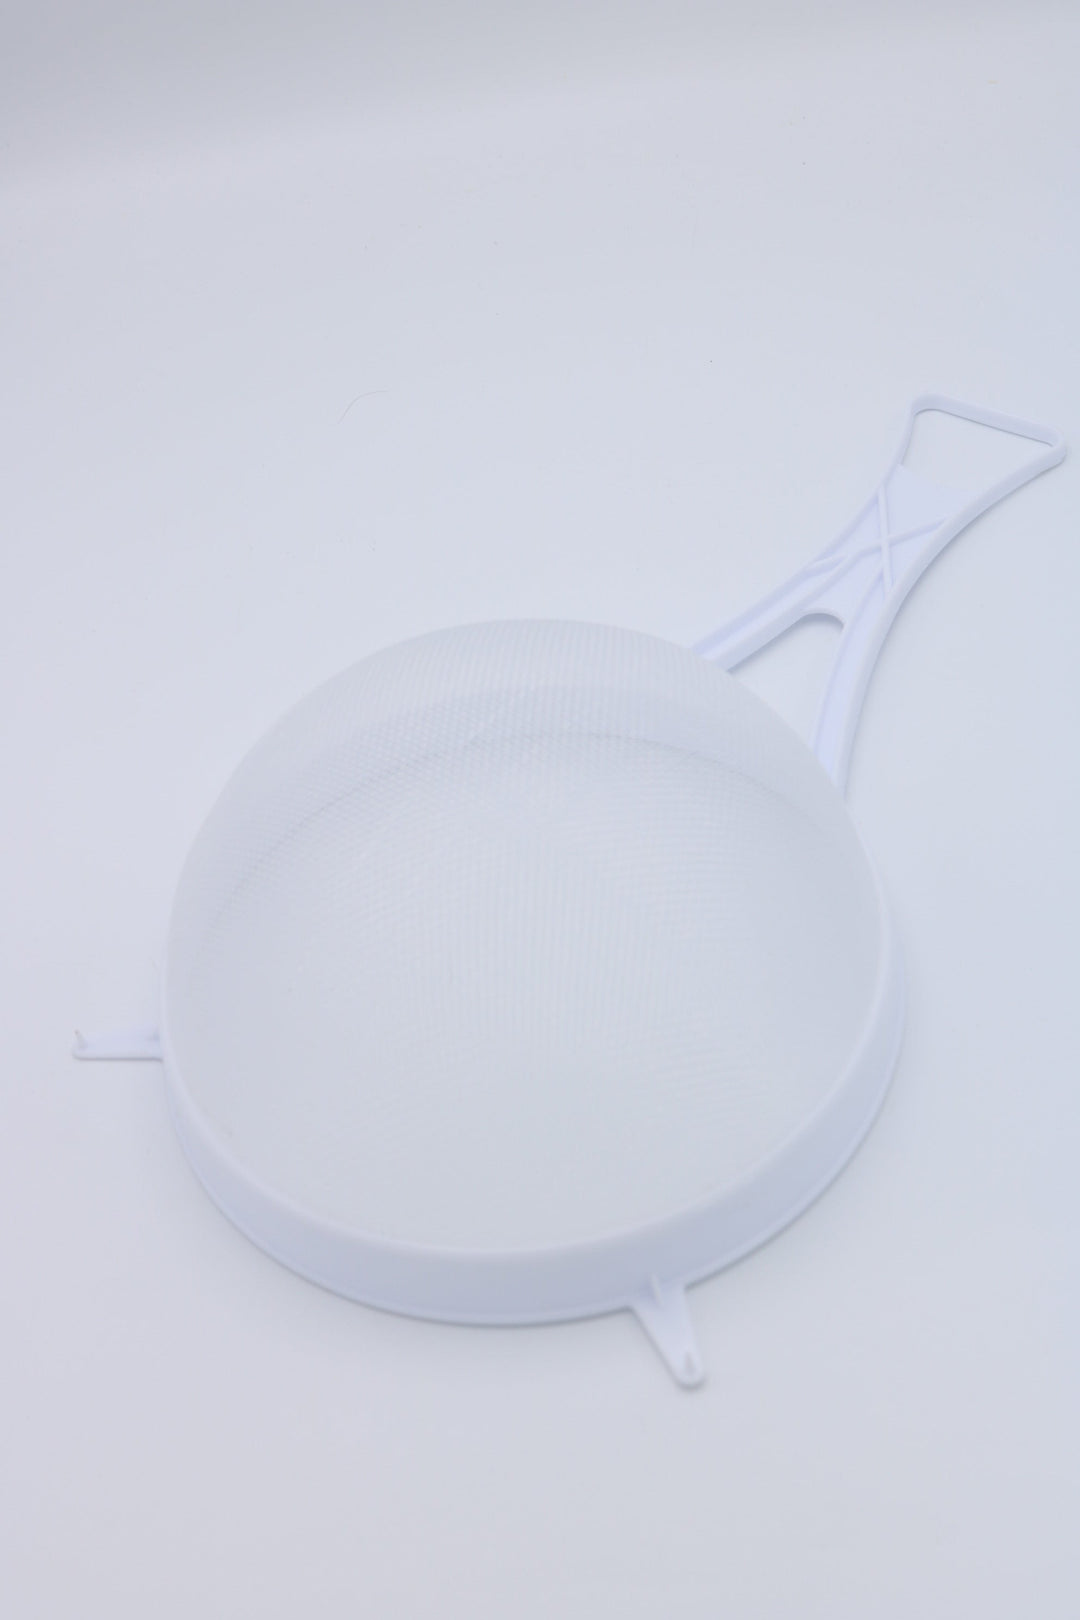 Plastic zeef -  Ø 18 cm